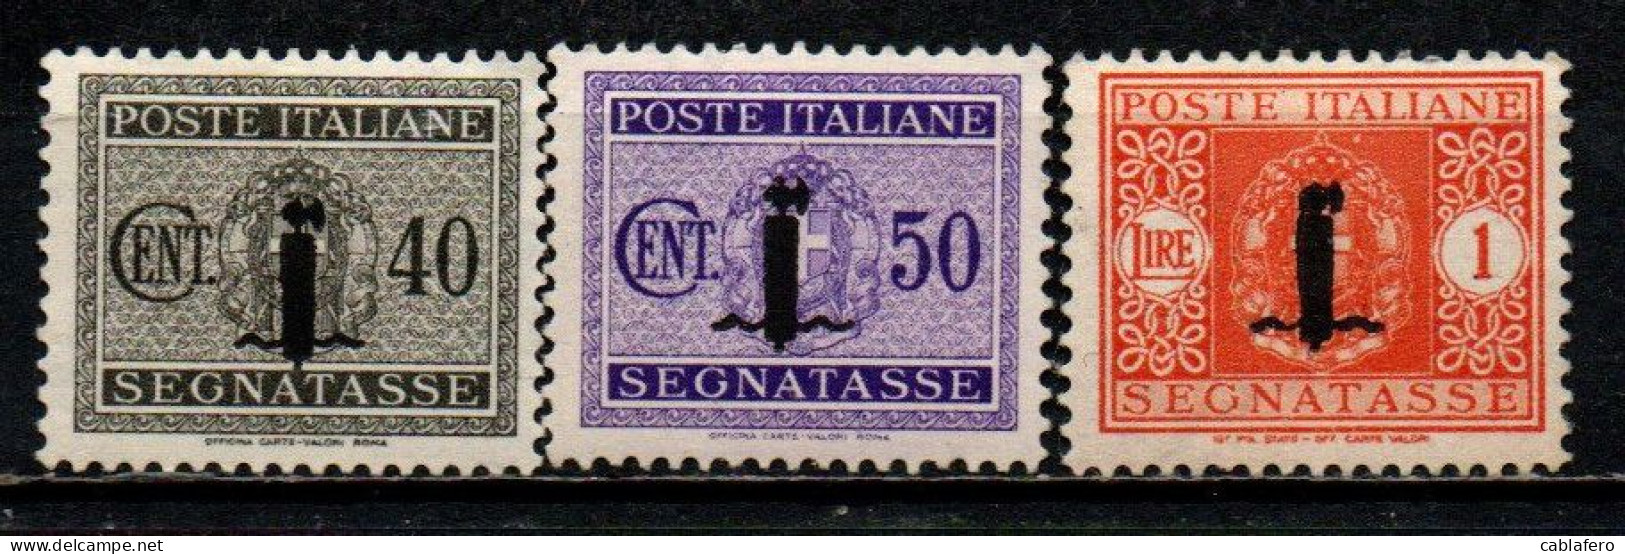 ITALIA RSI - 1944 - SEGNATASSE - VALORI DA 40-50 CENT. E 1 LIRA - MH - Impuestos